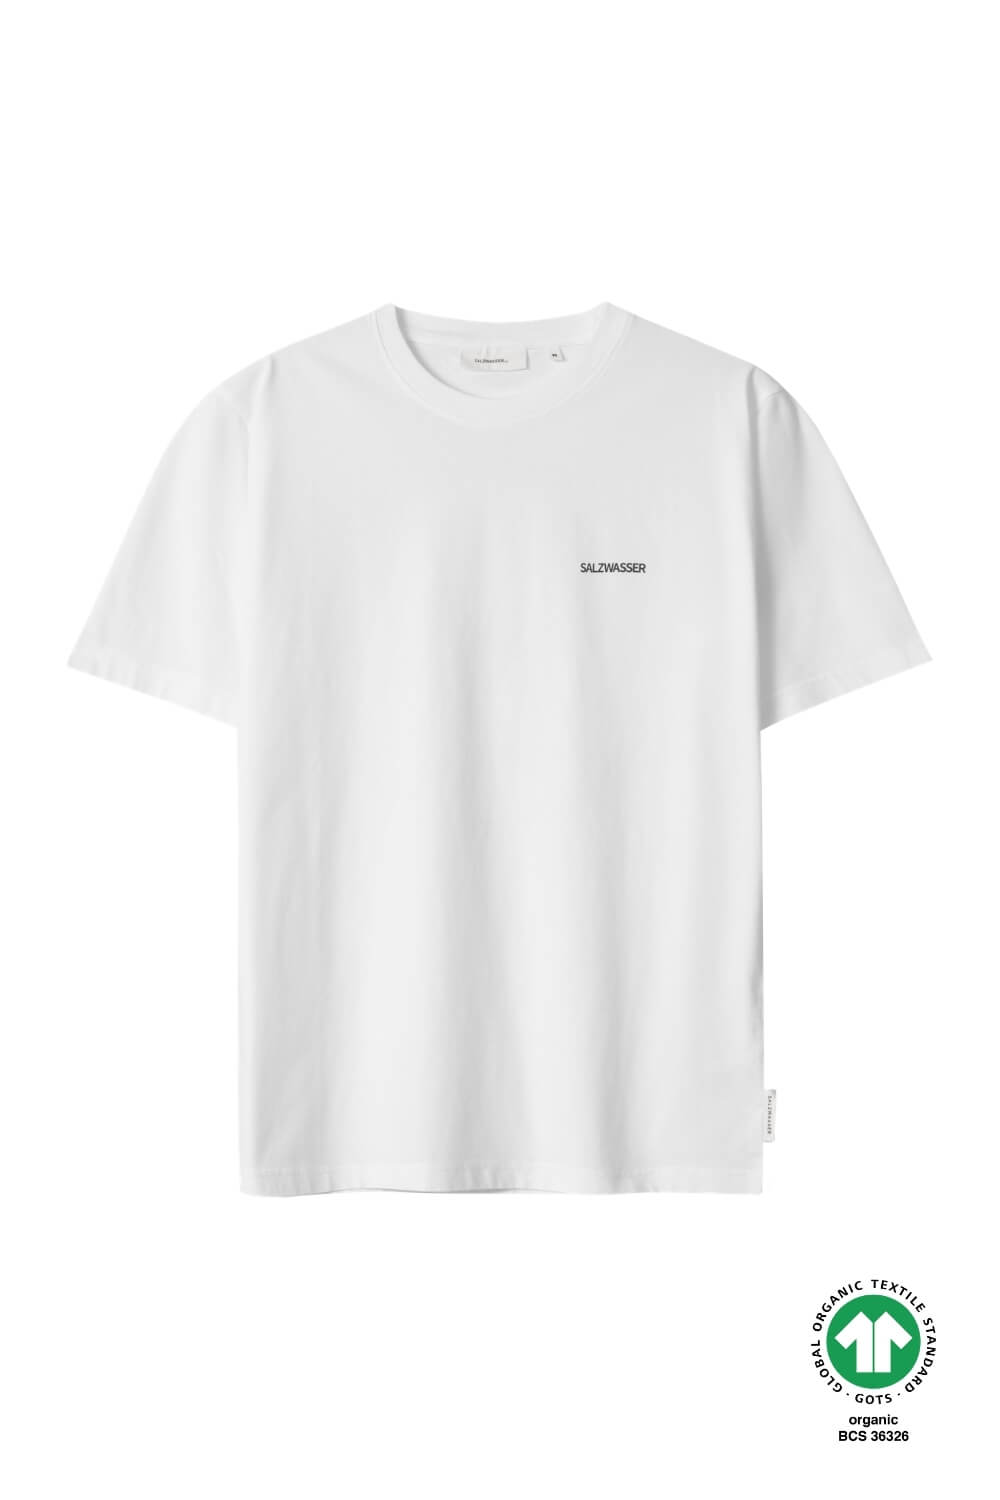 T-Shirt Tailwind White